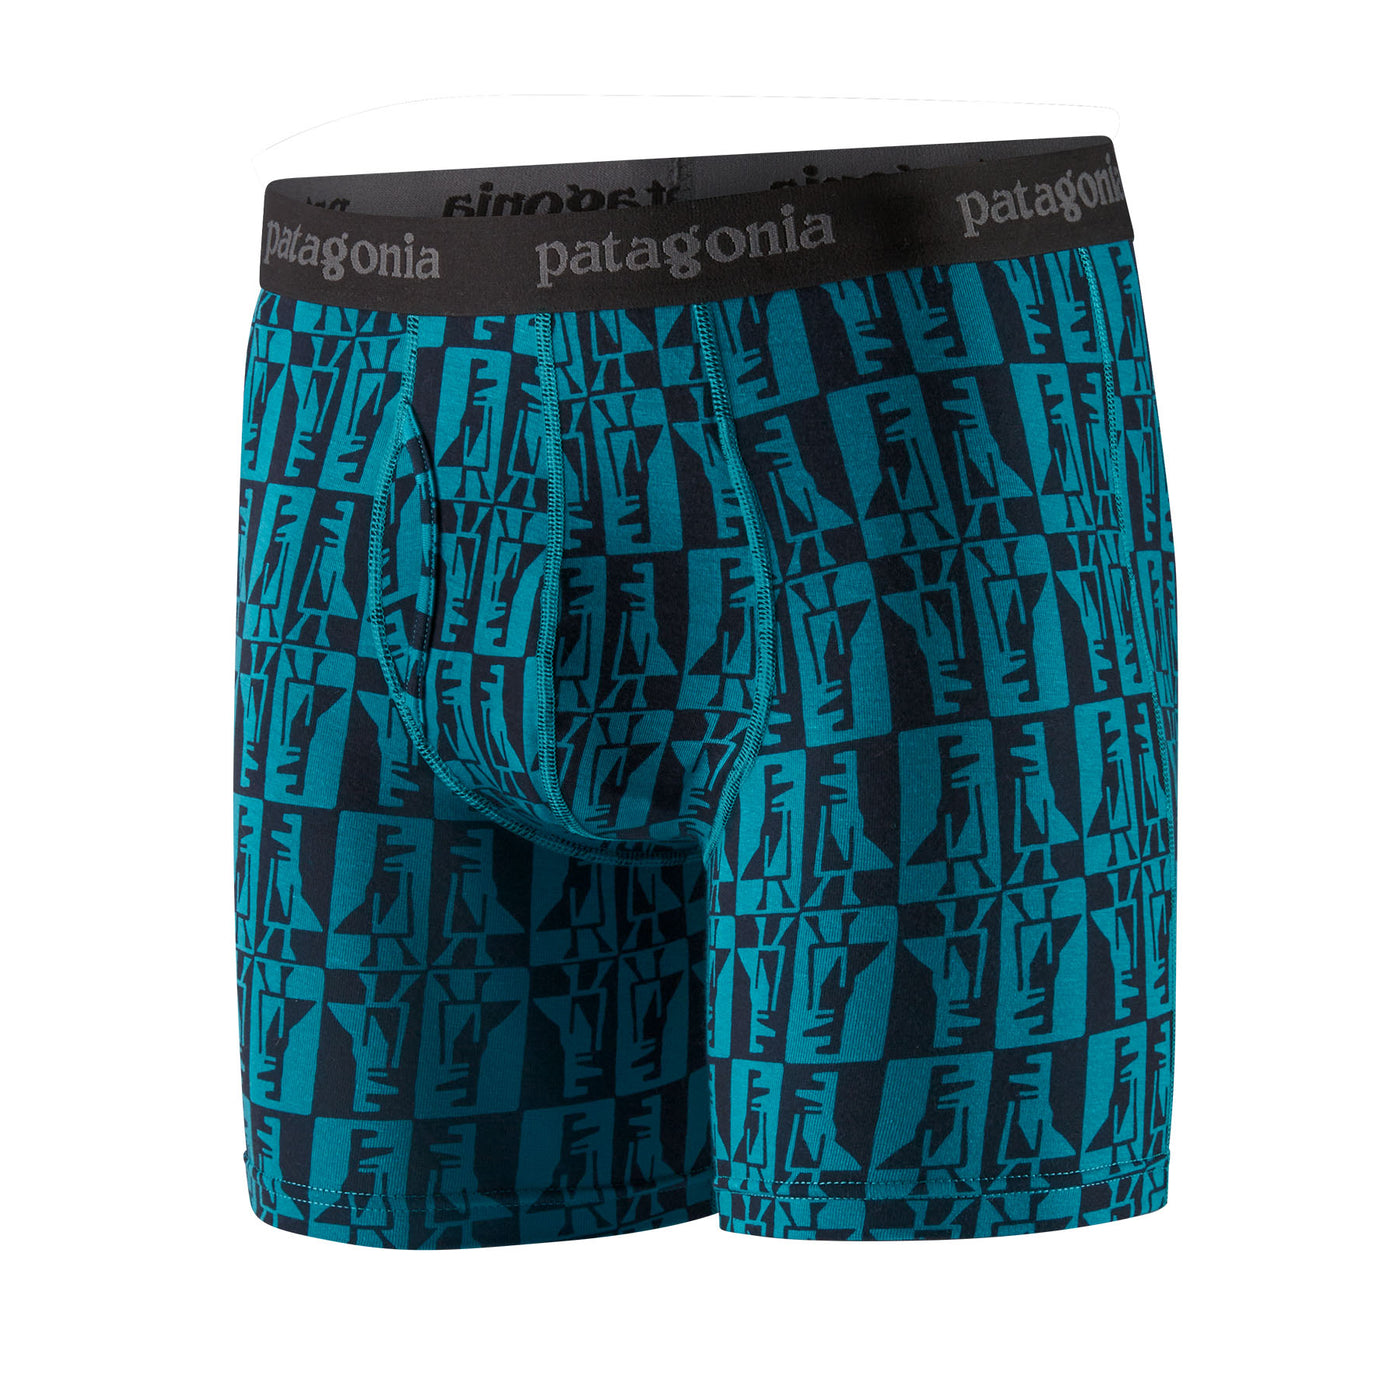 Patagonia Men's Essential 4½ in. Boxer Shorts PISN